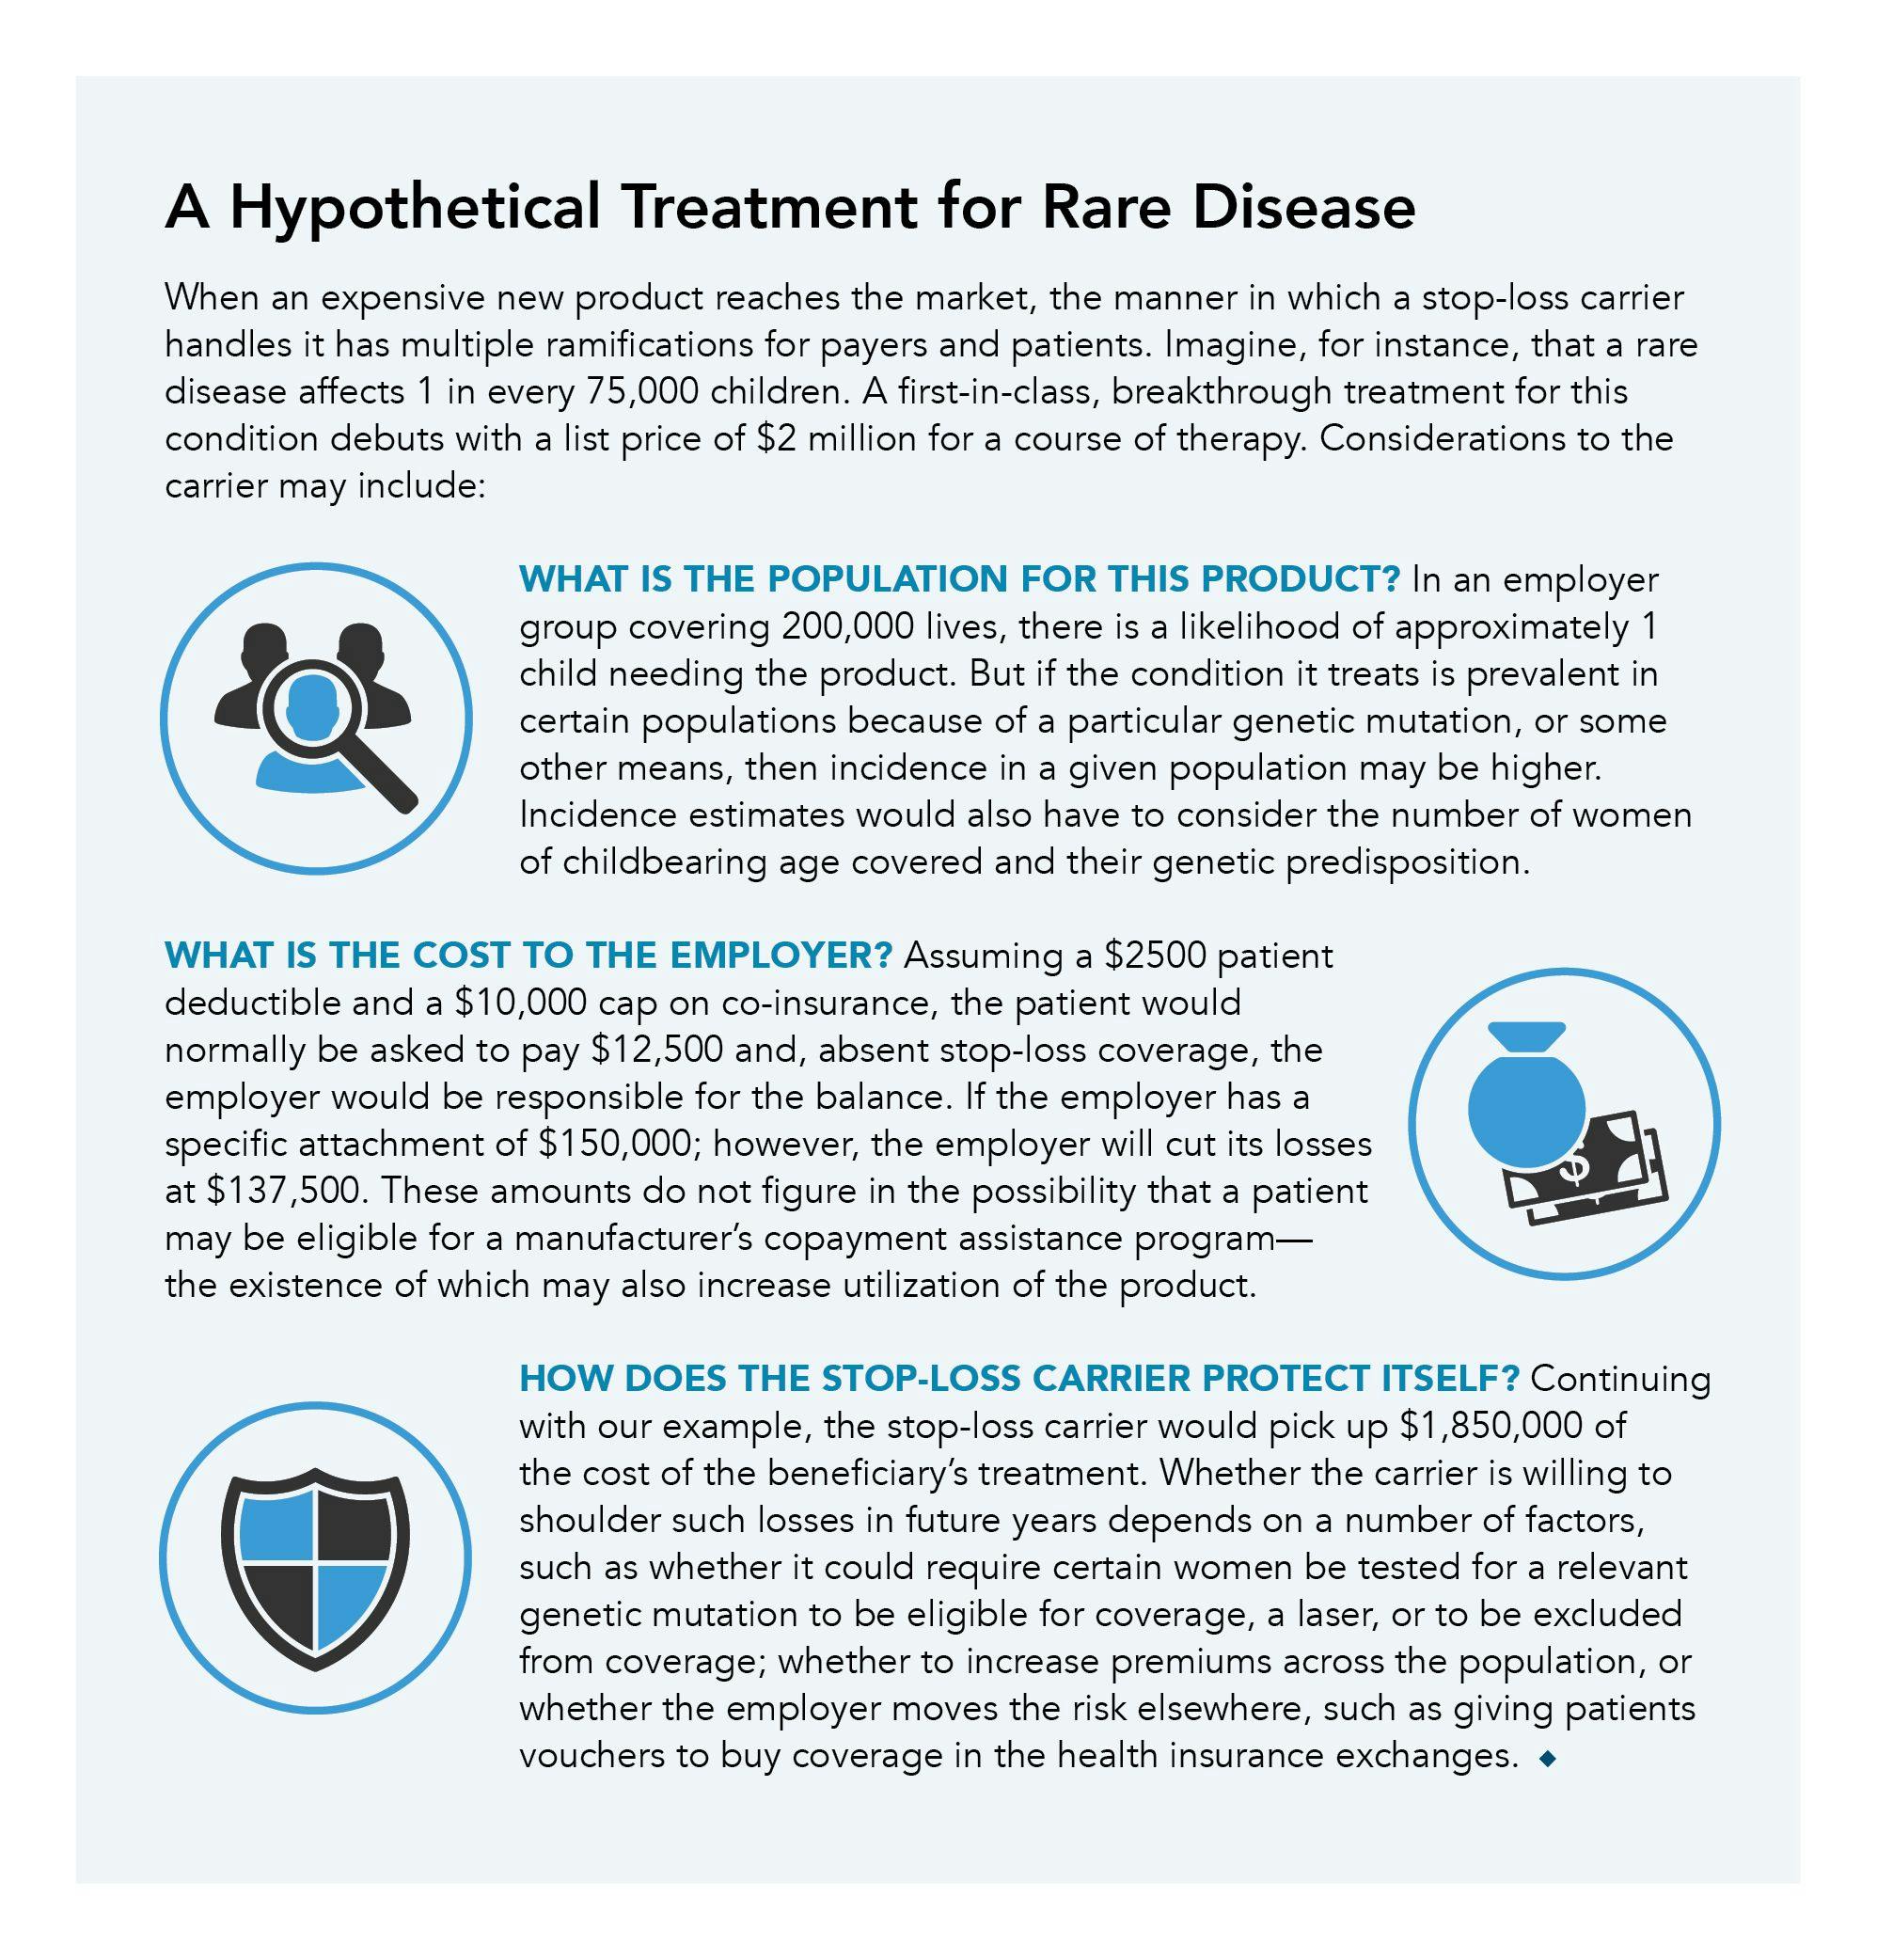 Hypothetical Treatment for Rare Disease